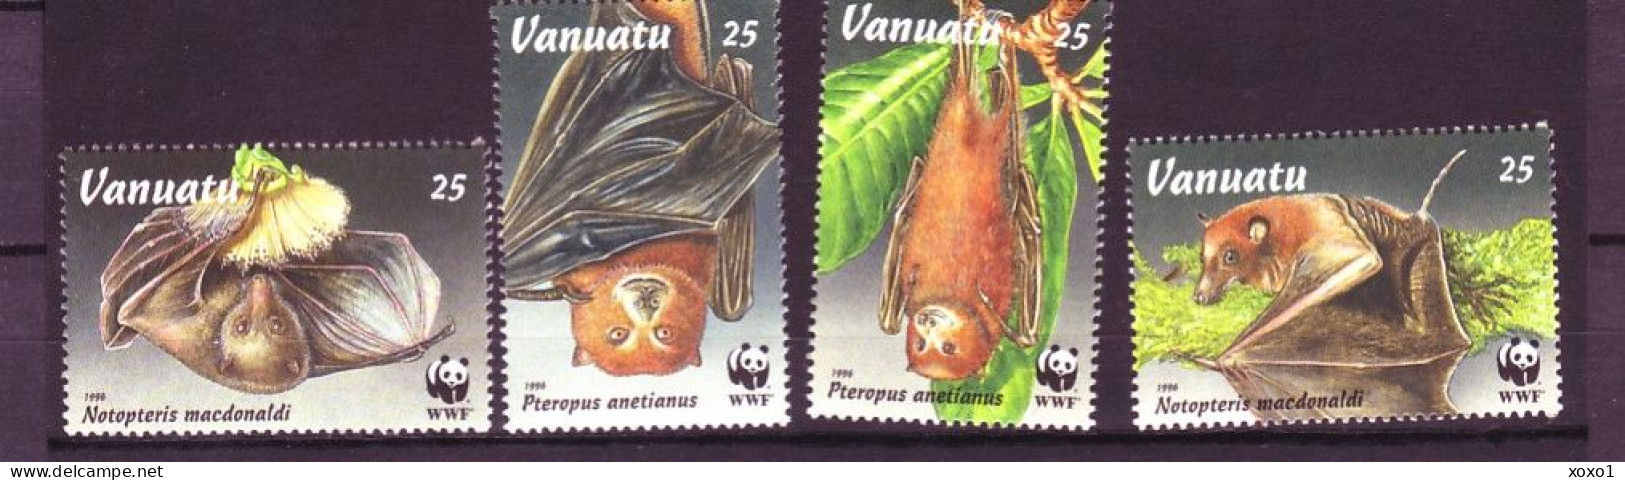 Vanuatu 1996 MiNr. 1004 - 1009 WWF Mammals Bats Insular Flying Fox, Fijian Blossom Bat  4v  MNH** 3.60 € - Nuevos